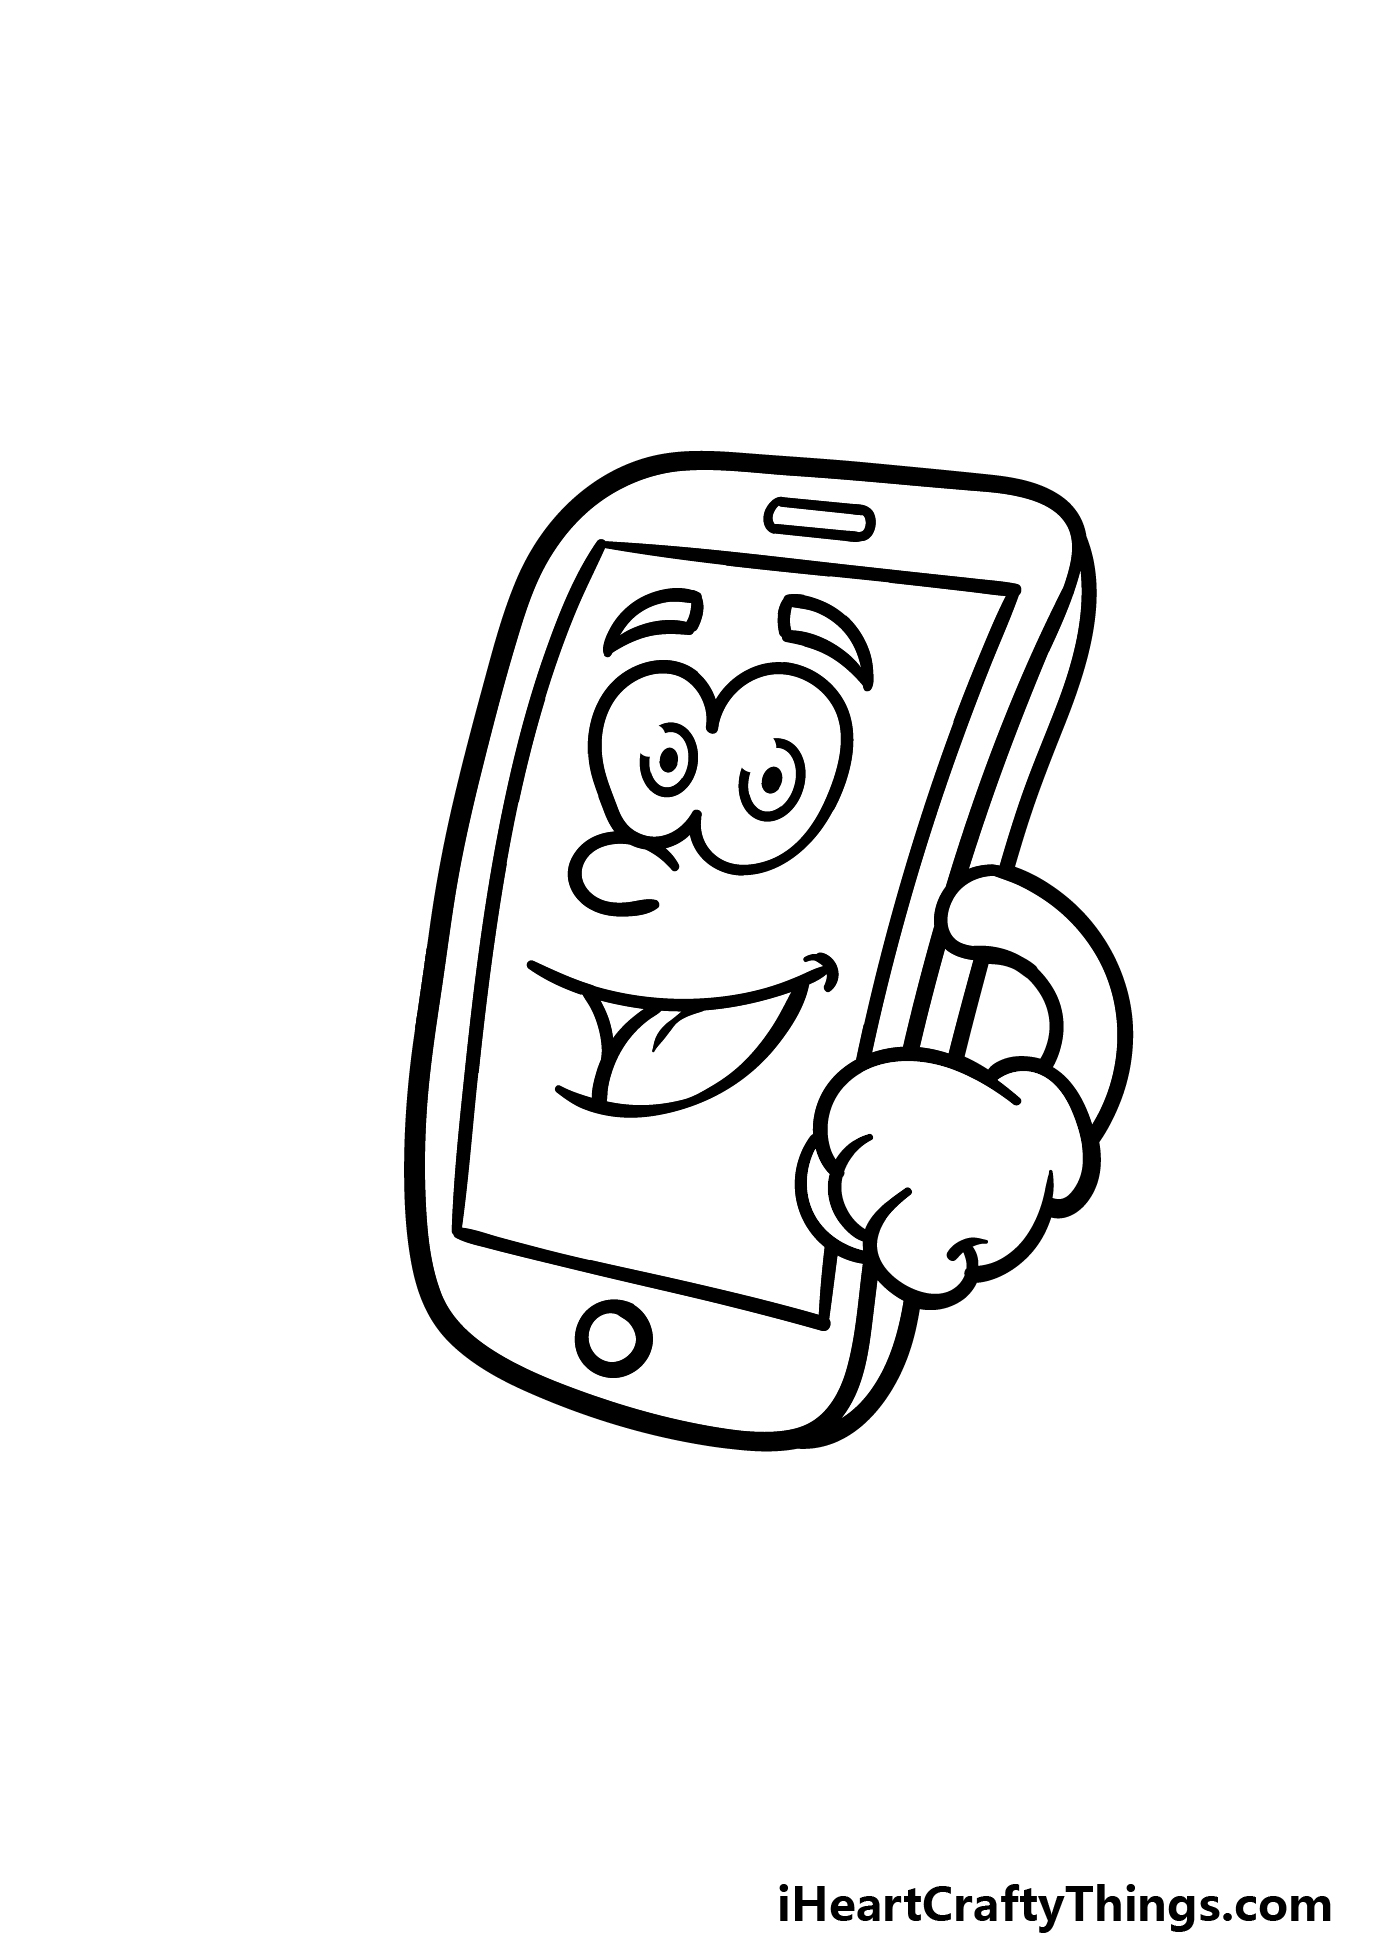 how to draw a cartoon phone step 5